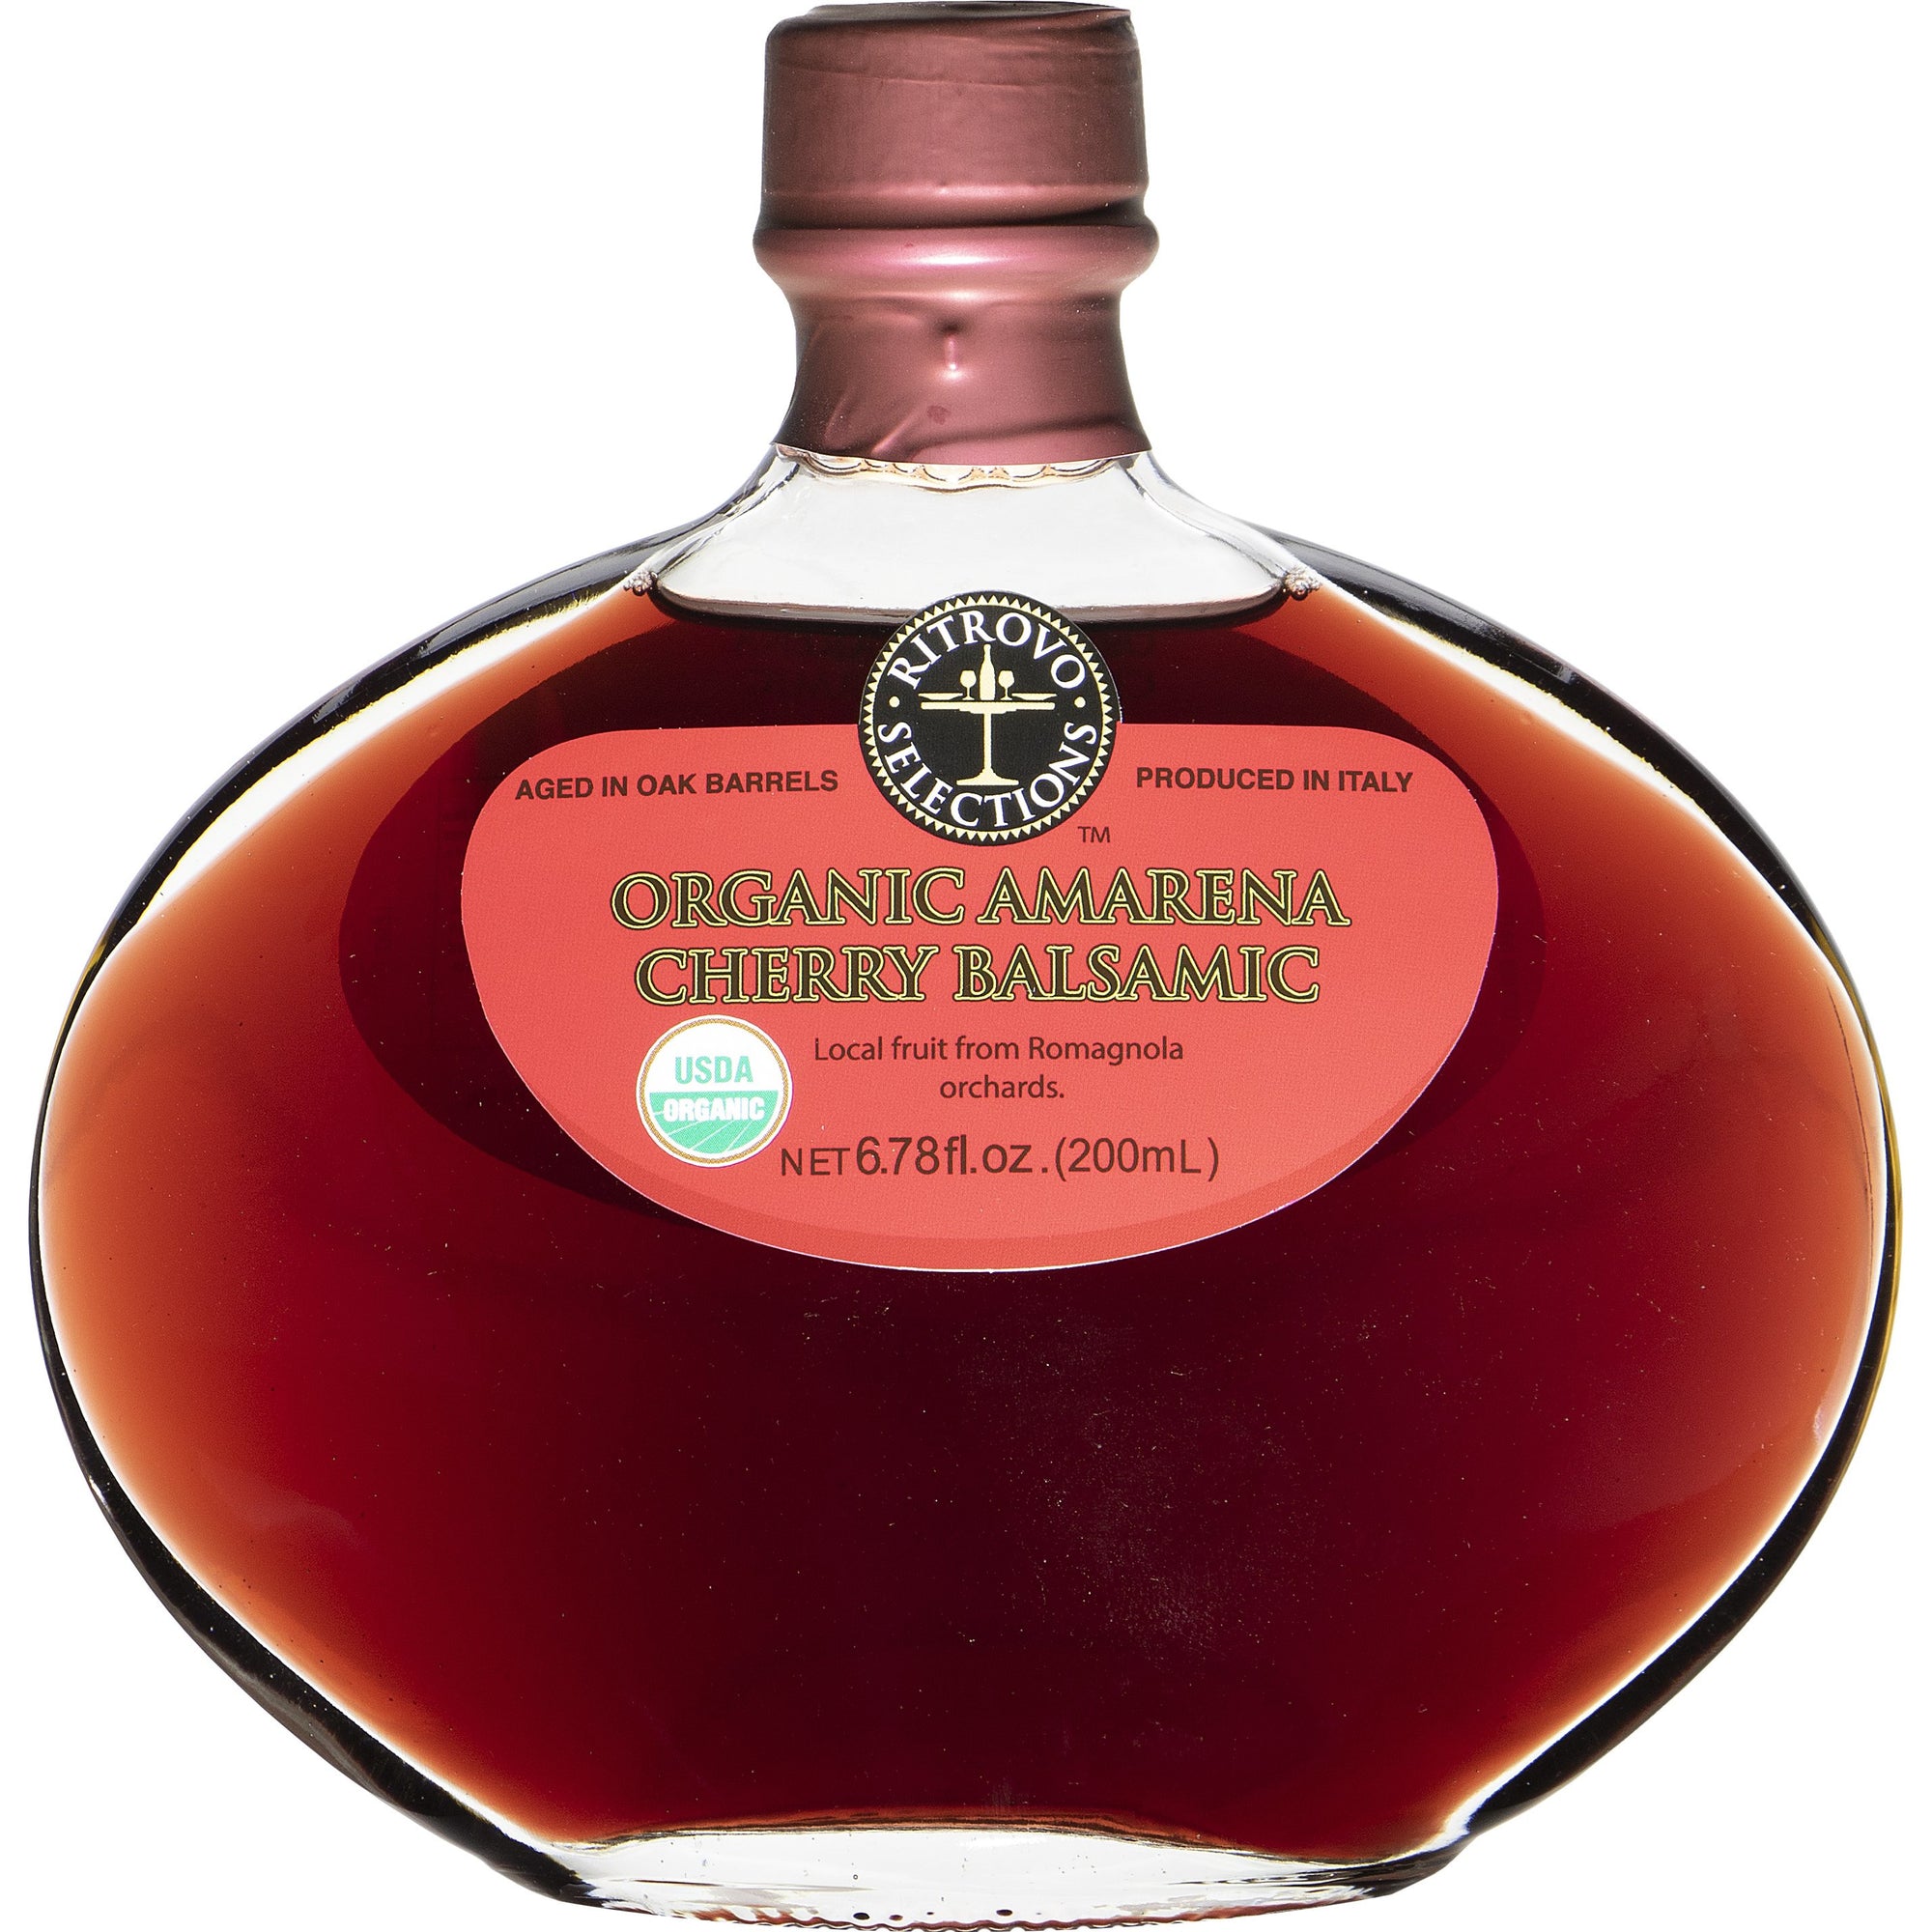 Ritrovo Selections Organic Amarena Cherry Balsamic 200mL